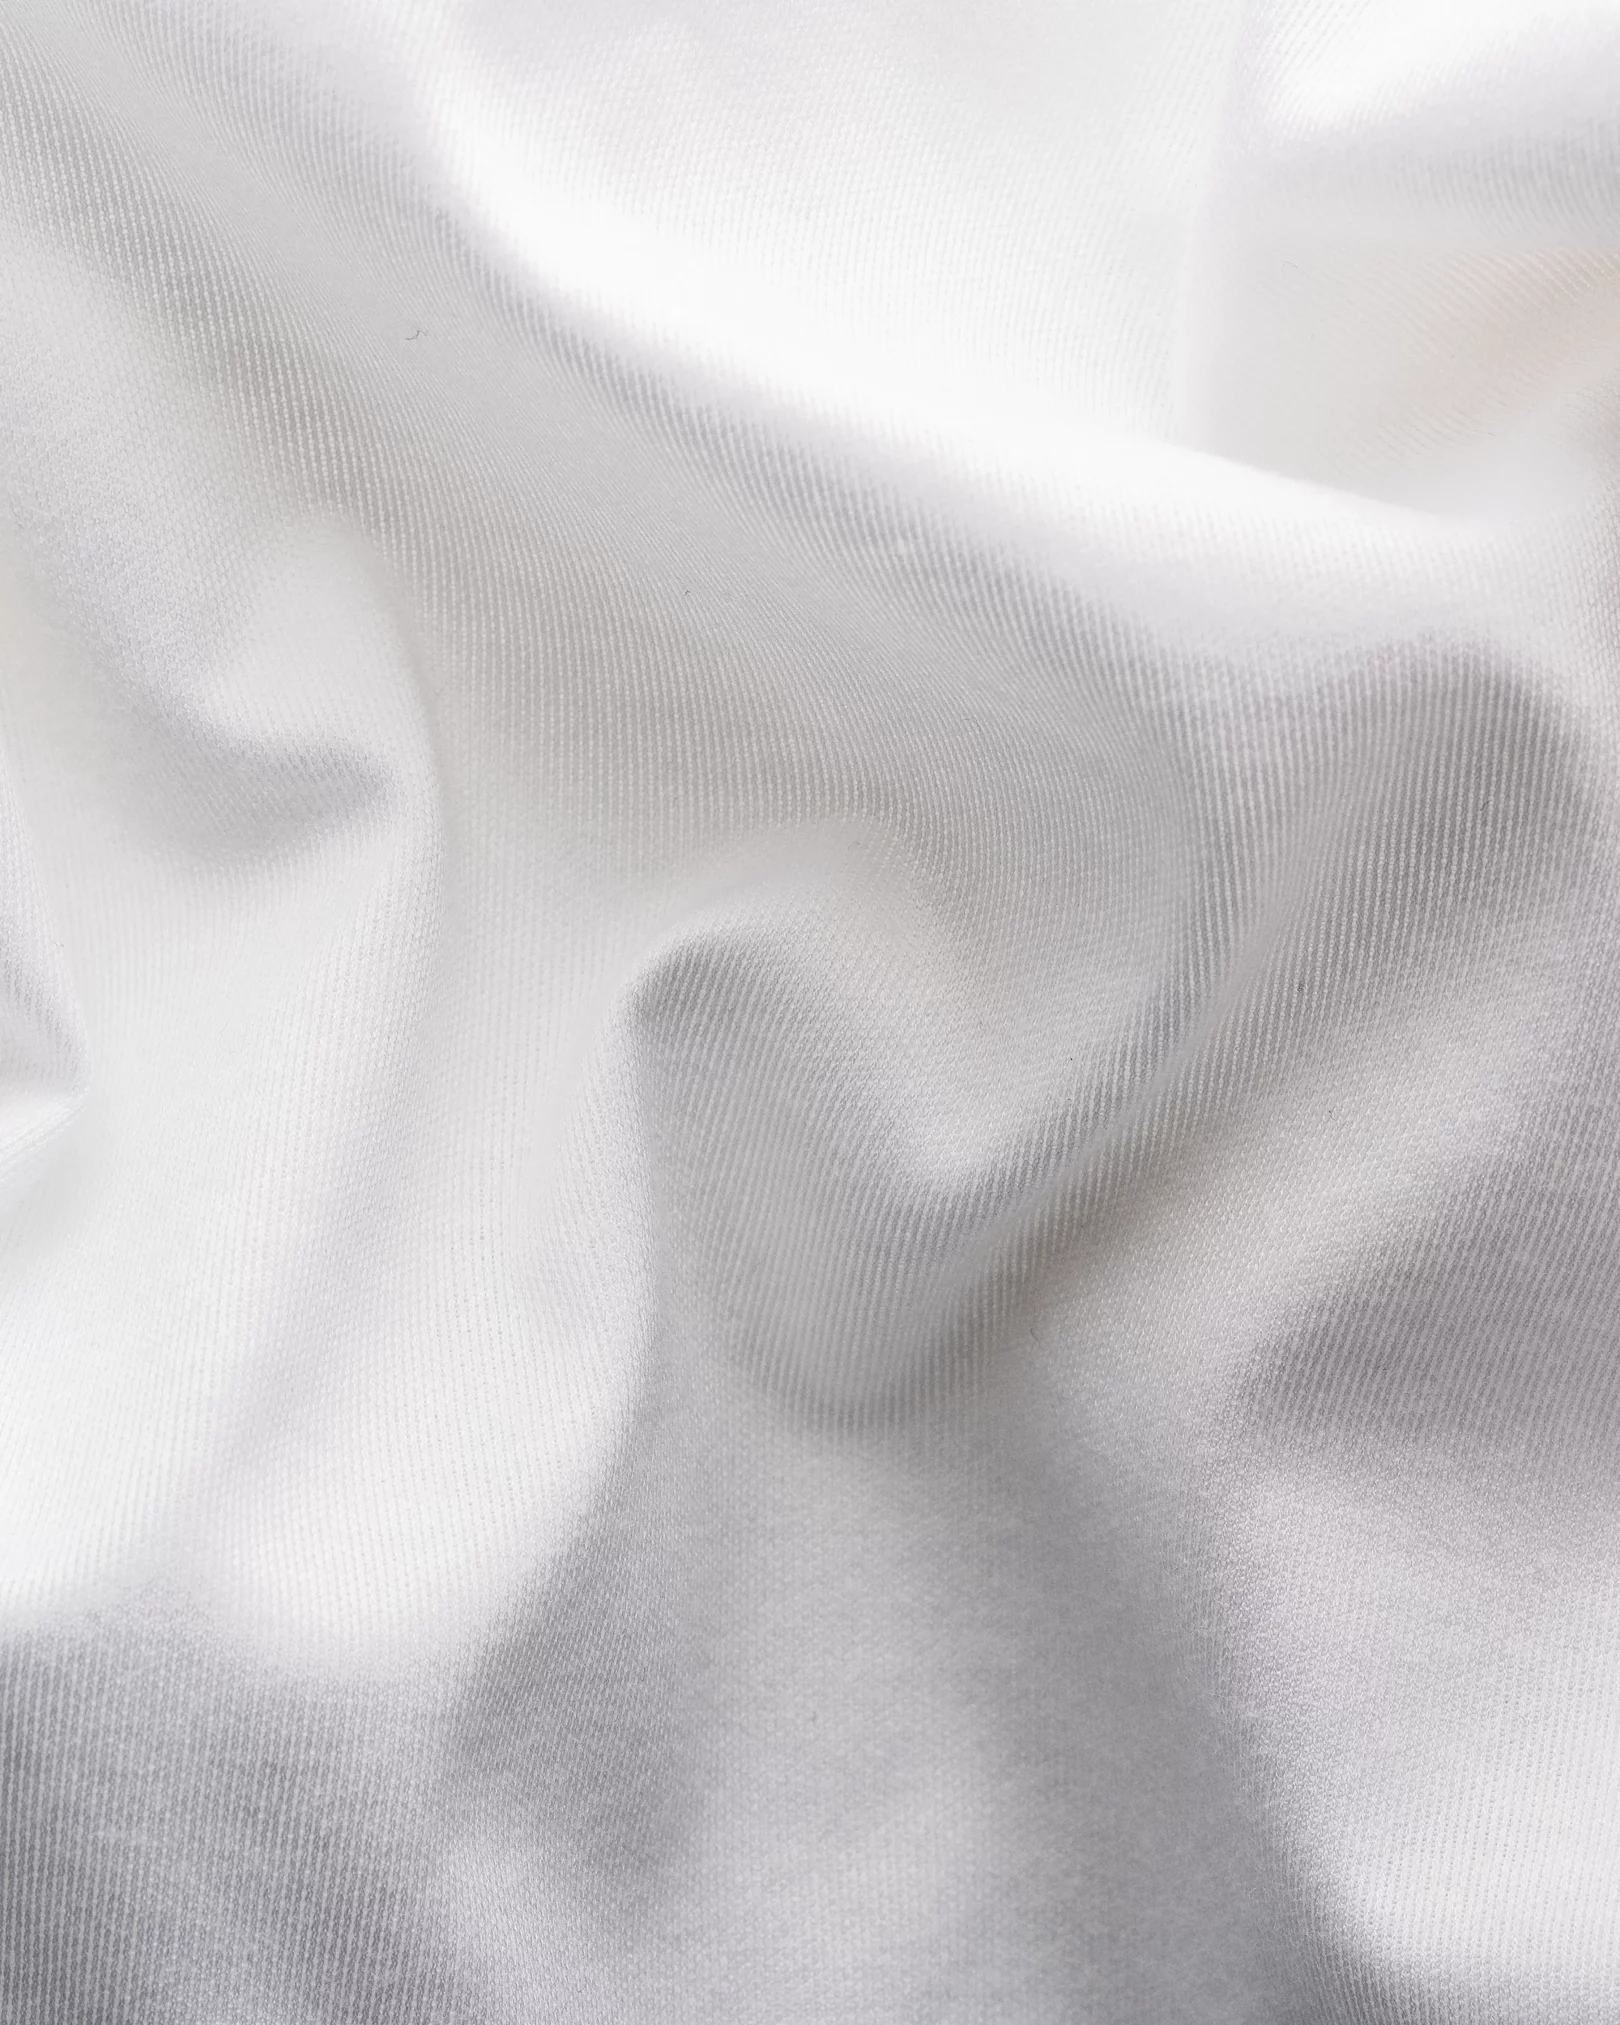 Eton - white jersey knitted short sleeve